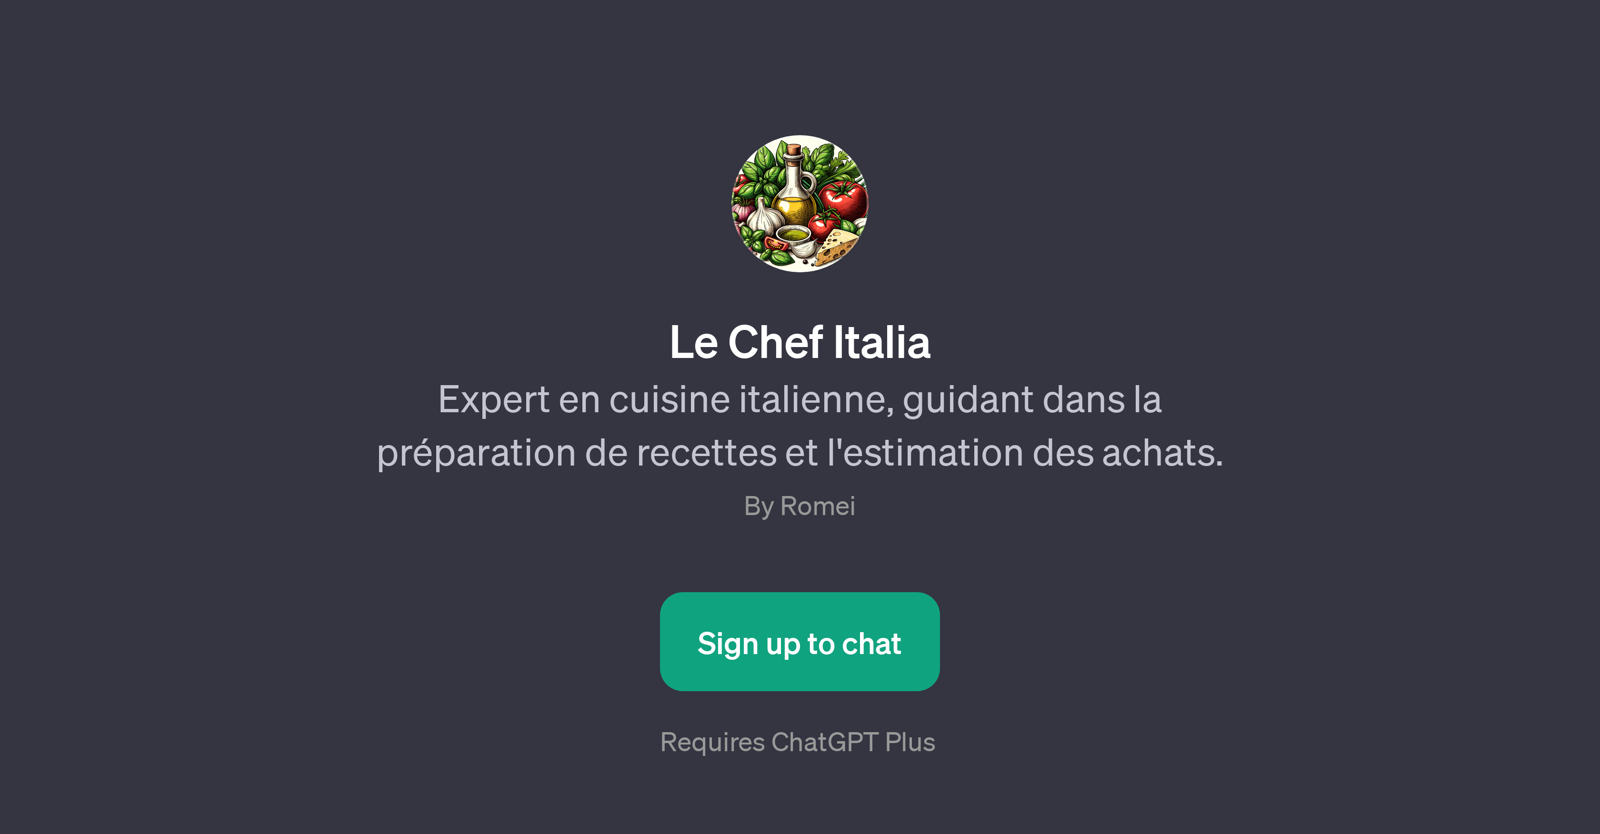 Le Chef Italia website